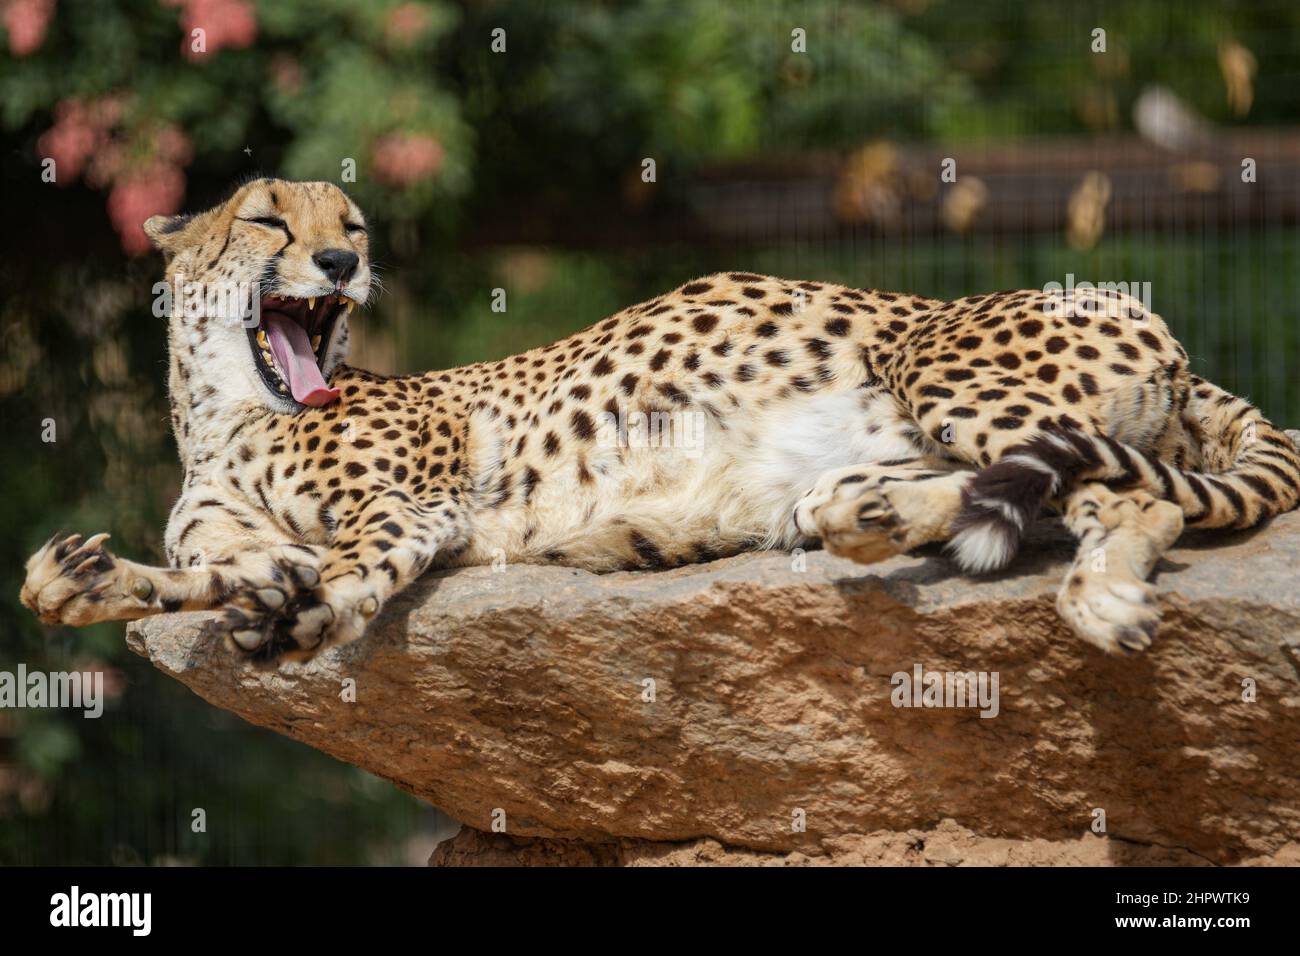 A cheetah basks in the warmth of the Arizona sun Stock Photo